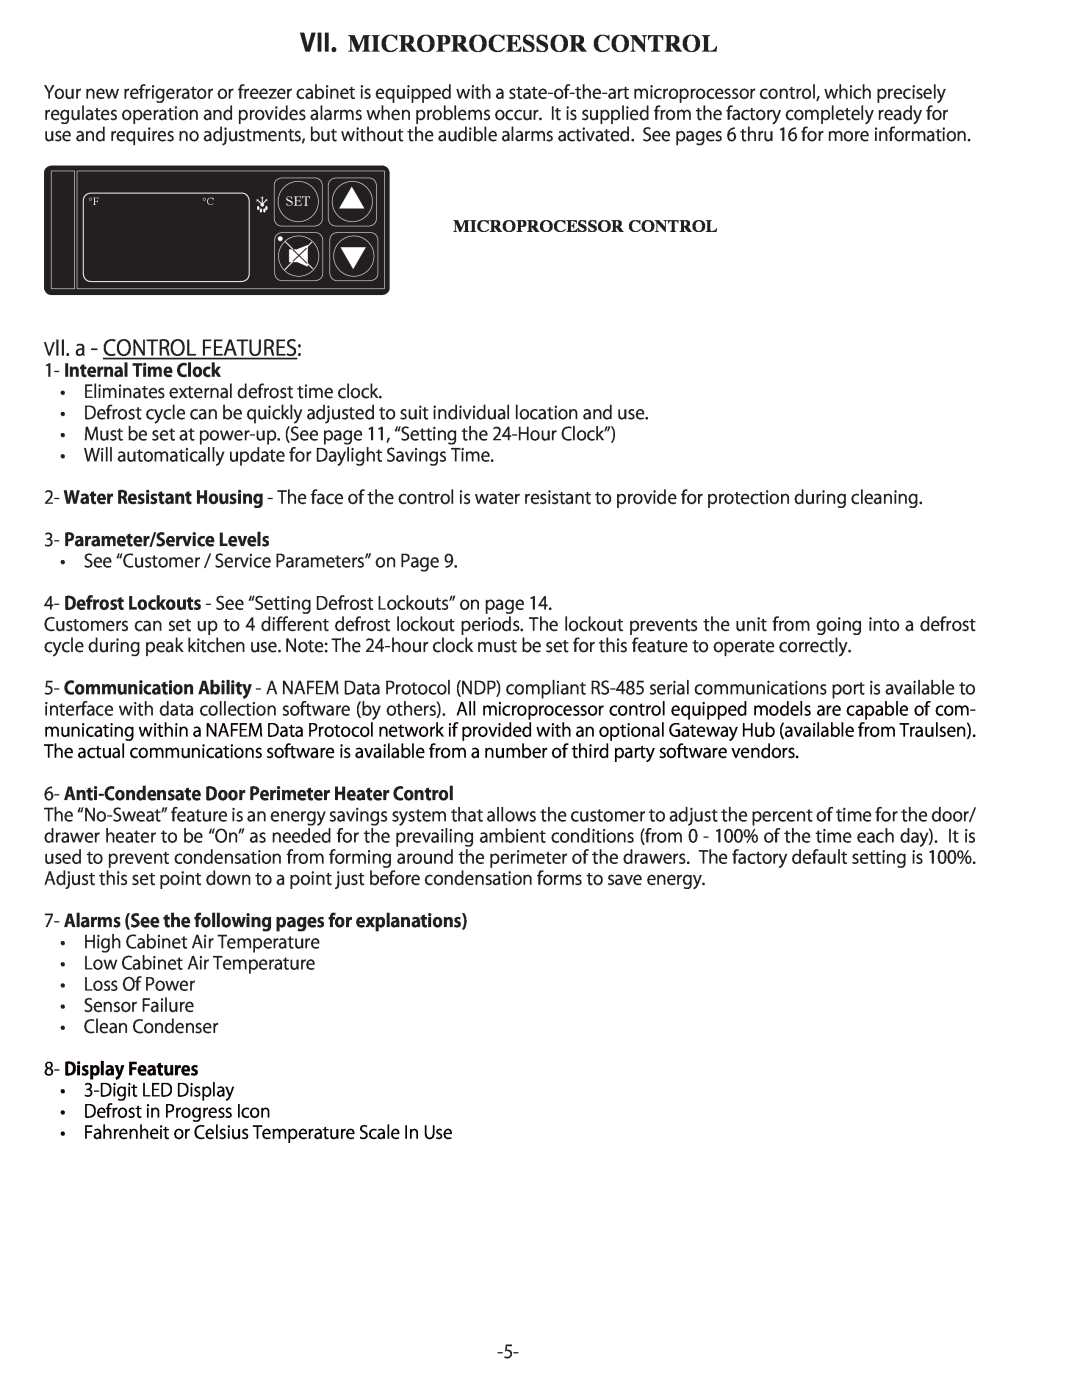 Traulsen TU072HT, TU044LT Vii. Microprocessor Control, Anti-Condensate Door Perimeter Heater Control, Display Features 